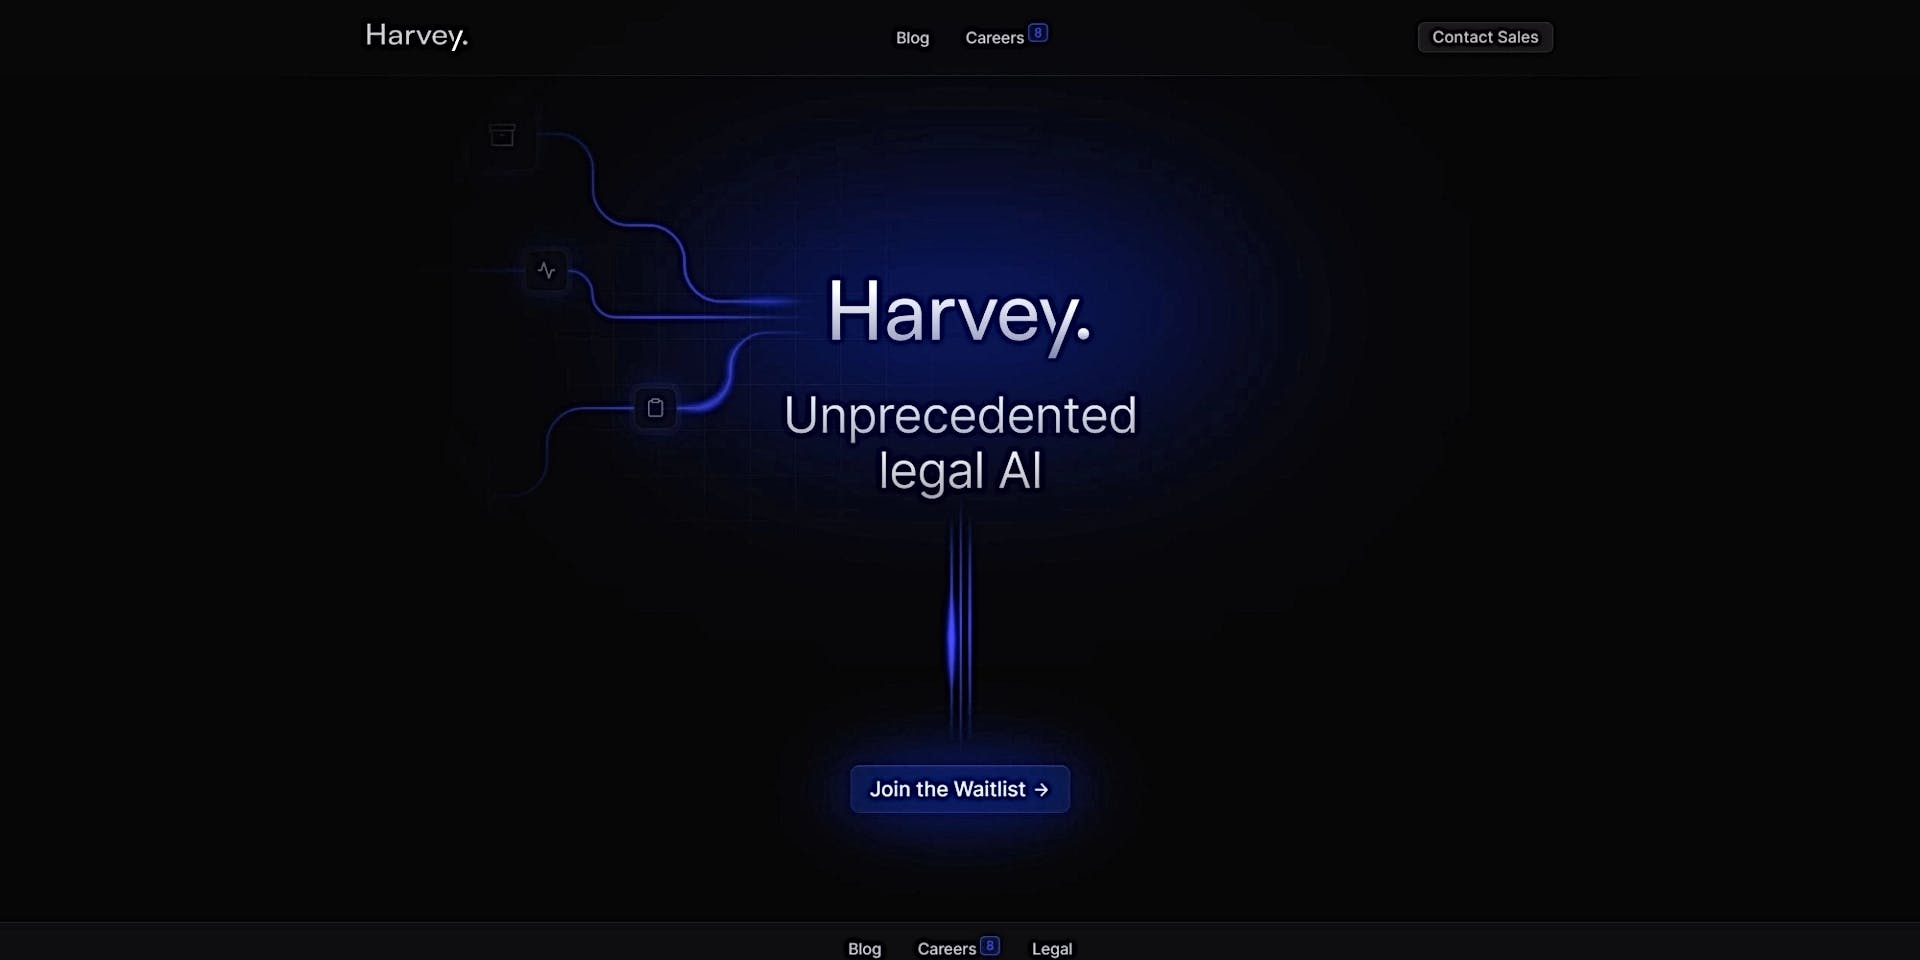 Harvey featured